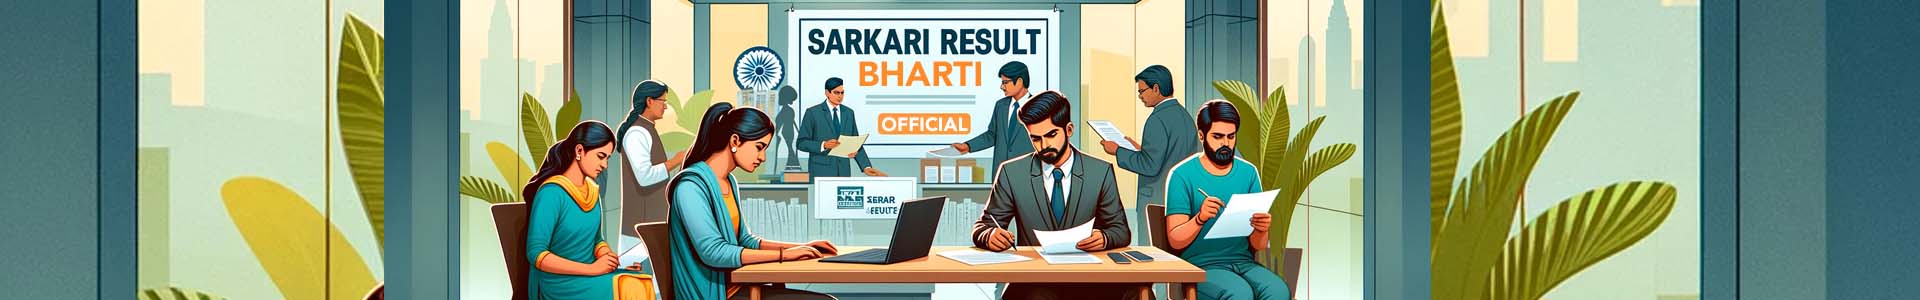 homepage banner sarkari result